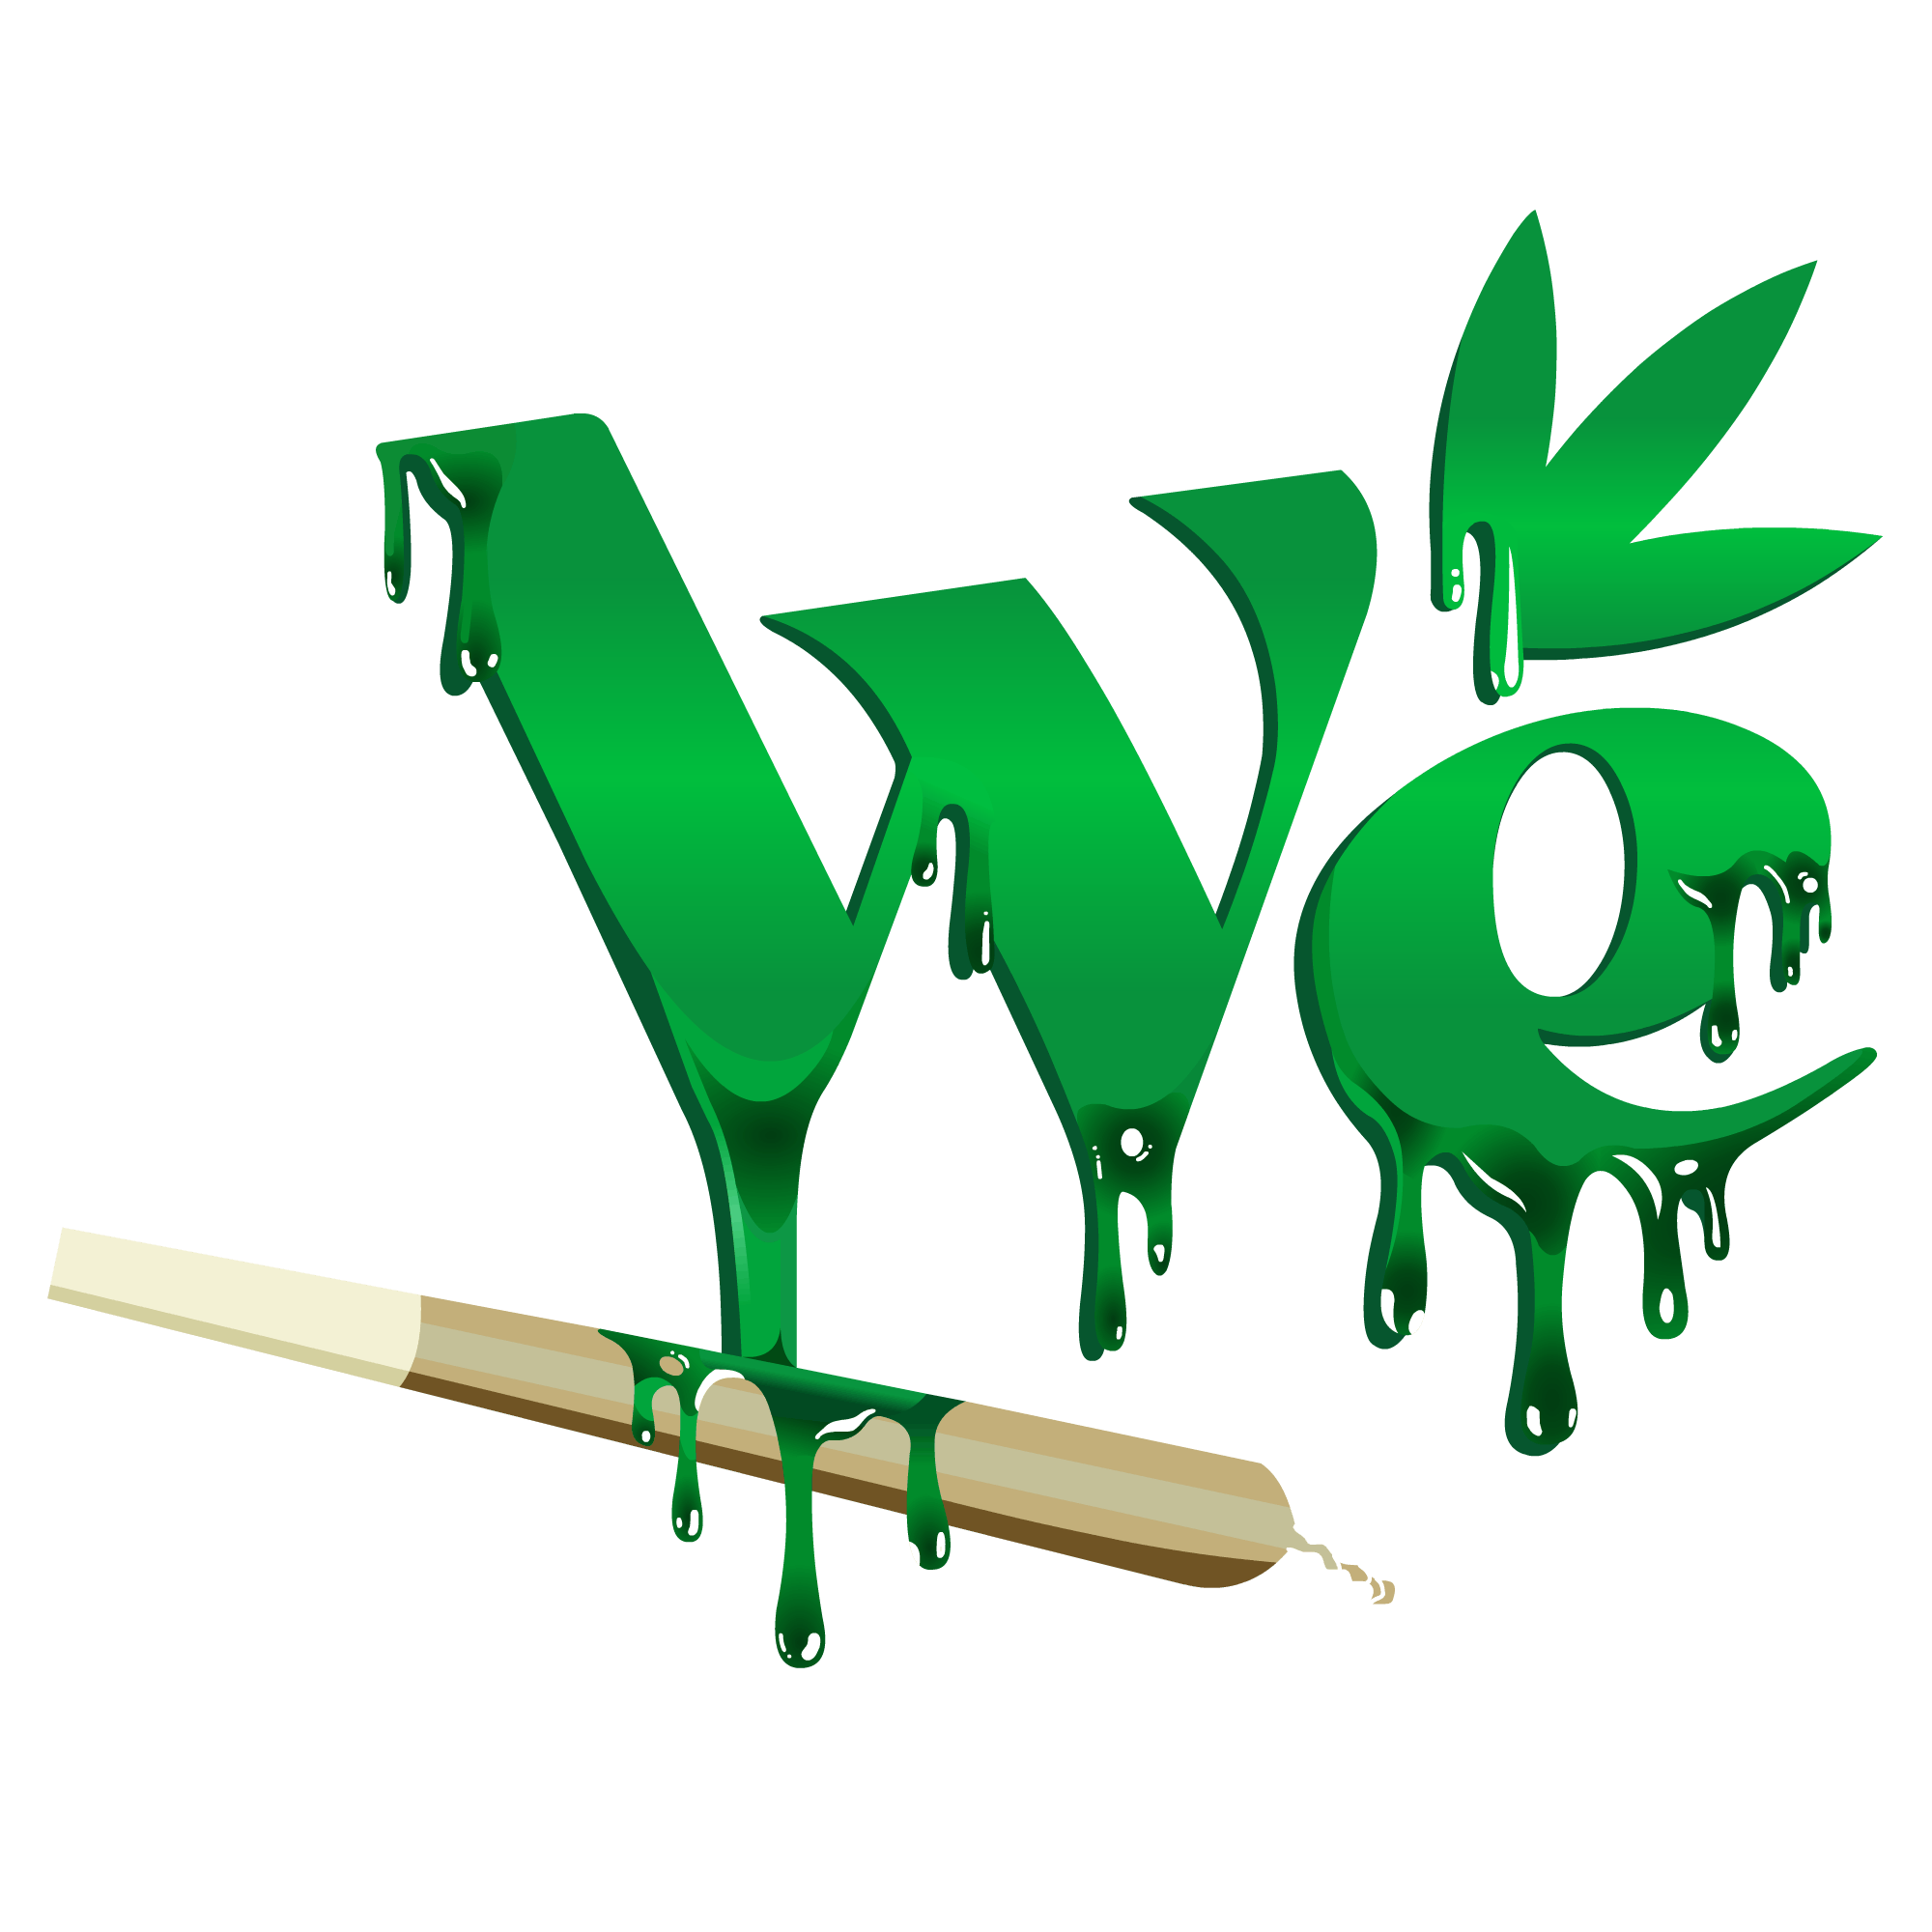 The We Store Cannabis - Windsor Dispensary-logo